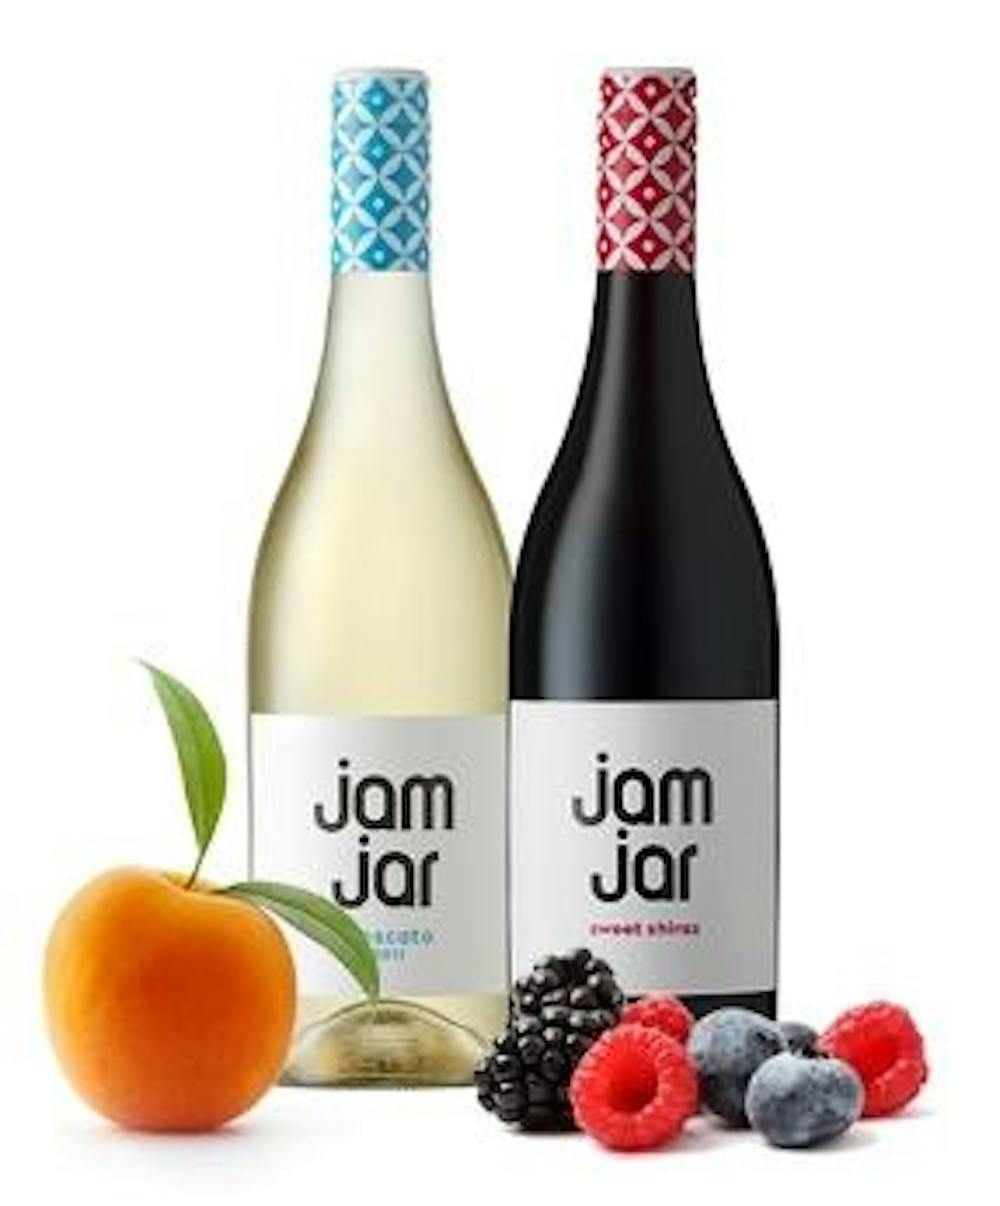 jam-jar-wines